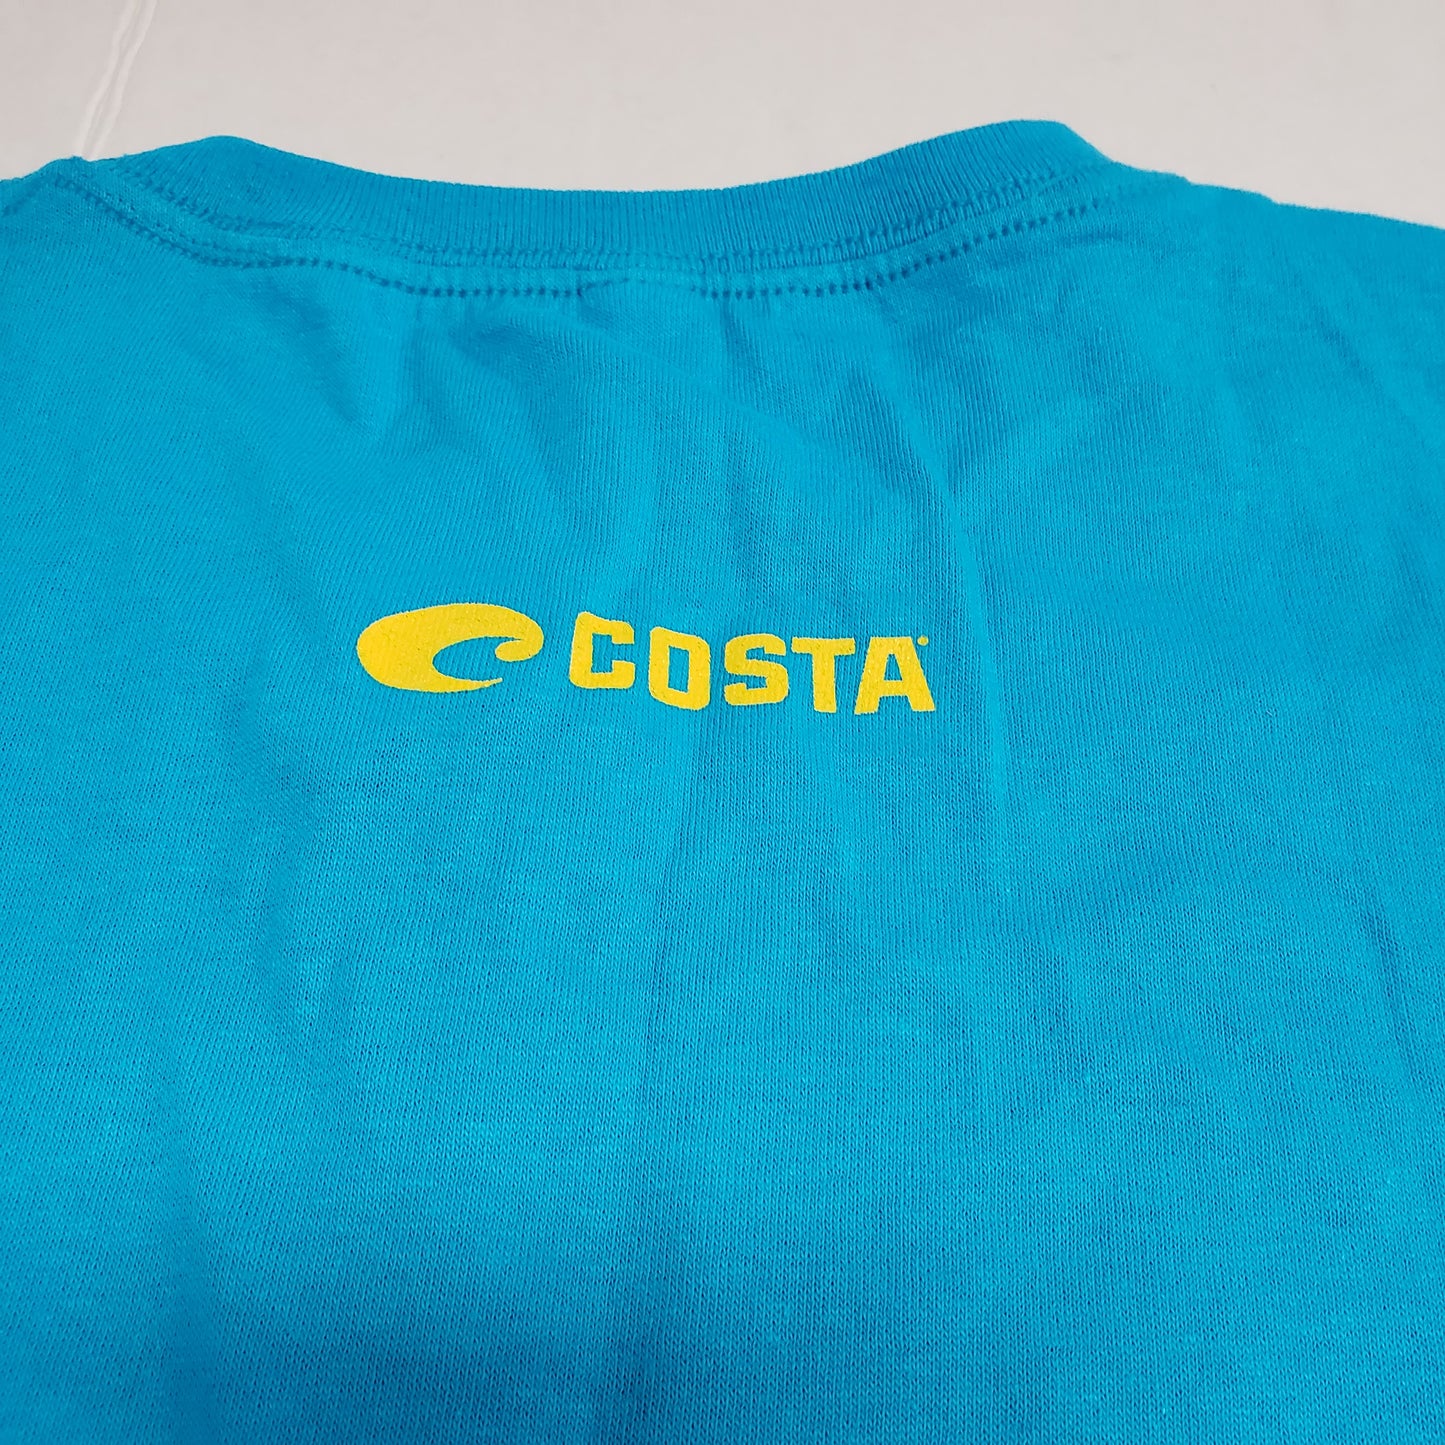 New Authentic Costa Short Sleeve T-Shirt Pez Velas Heather Blue XL